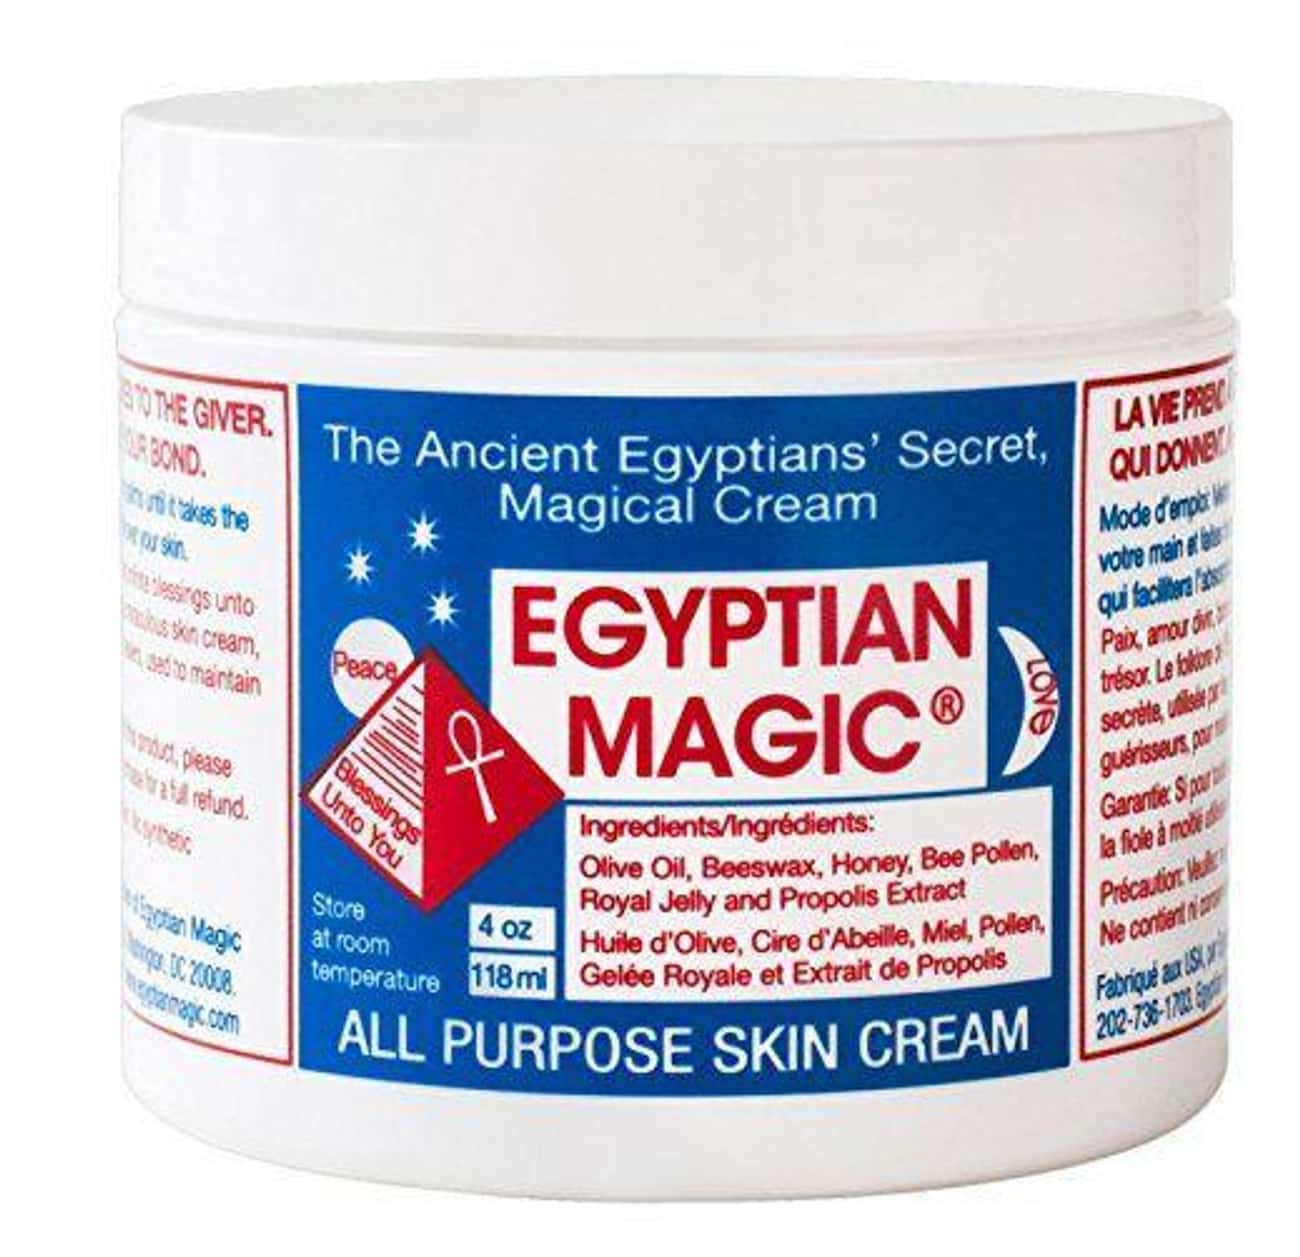 All Purpose Skin Cream By Egyptian Magic